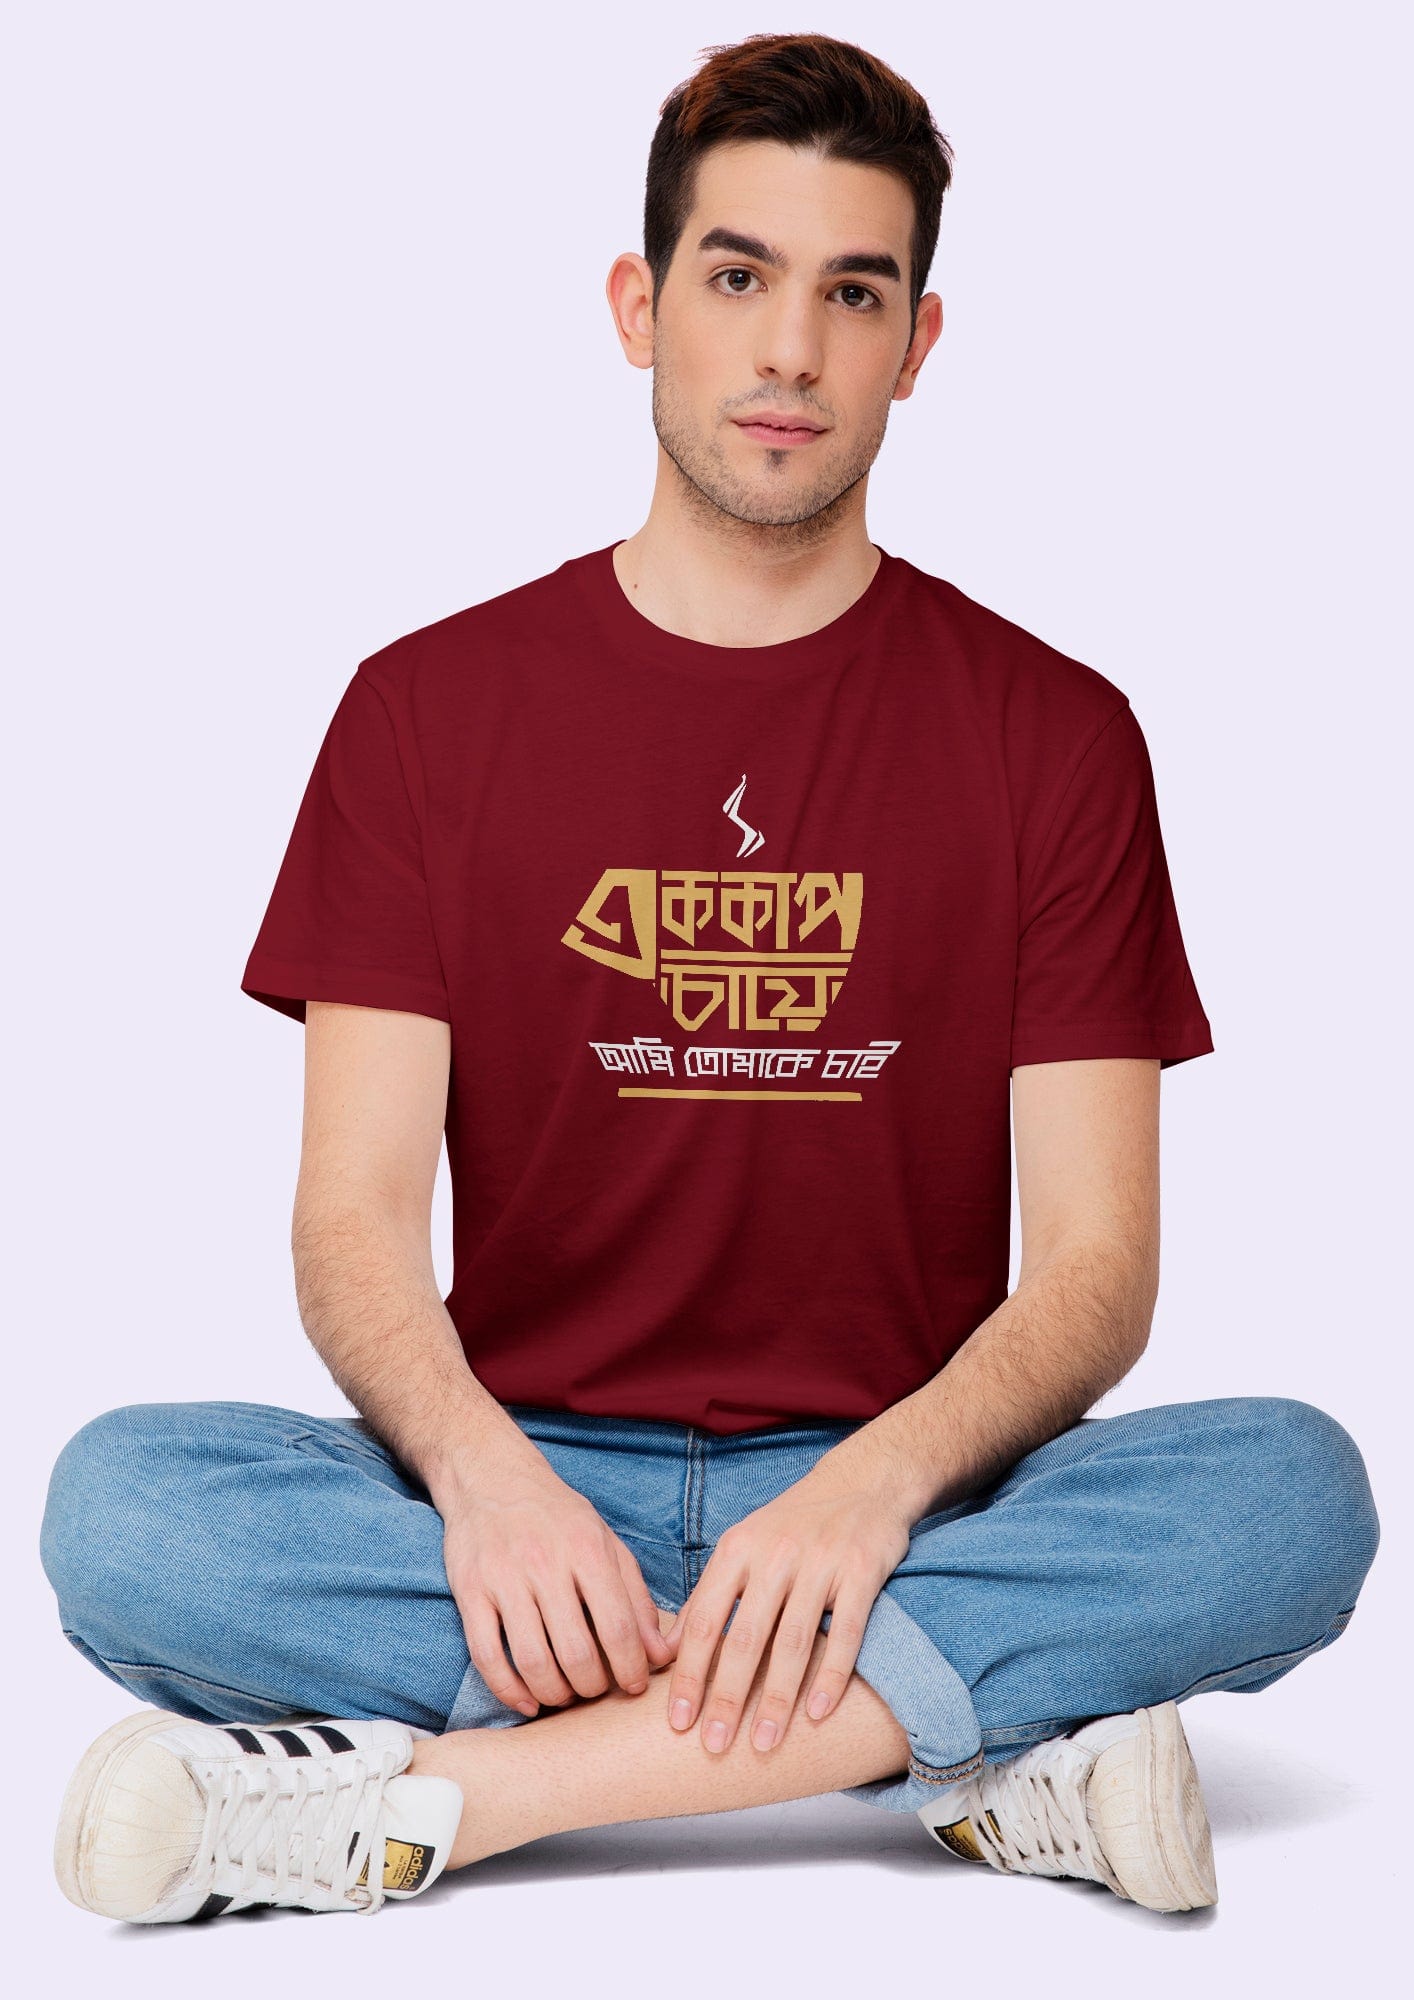 Ek Cup Chay Tomake Chai Printed Half Sleeve Premium Cotton T-shirt For Men